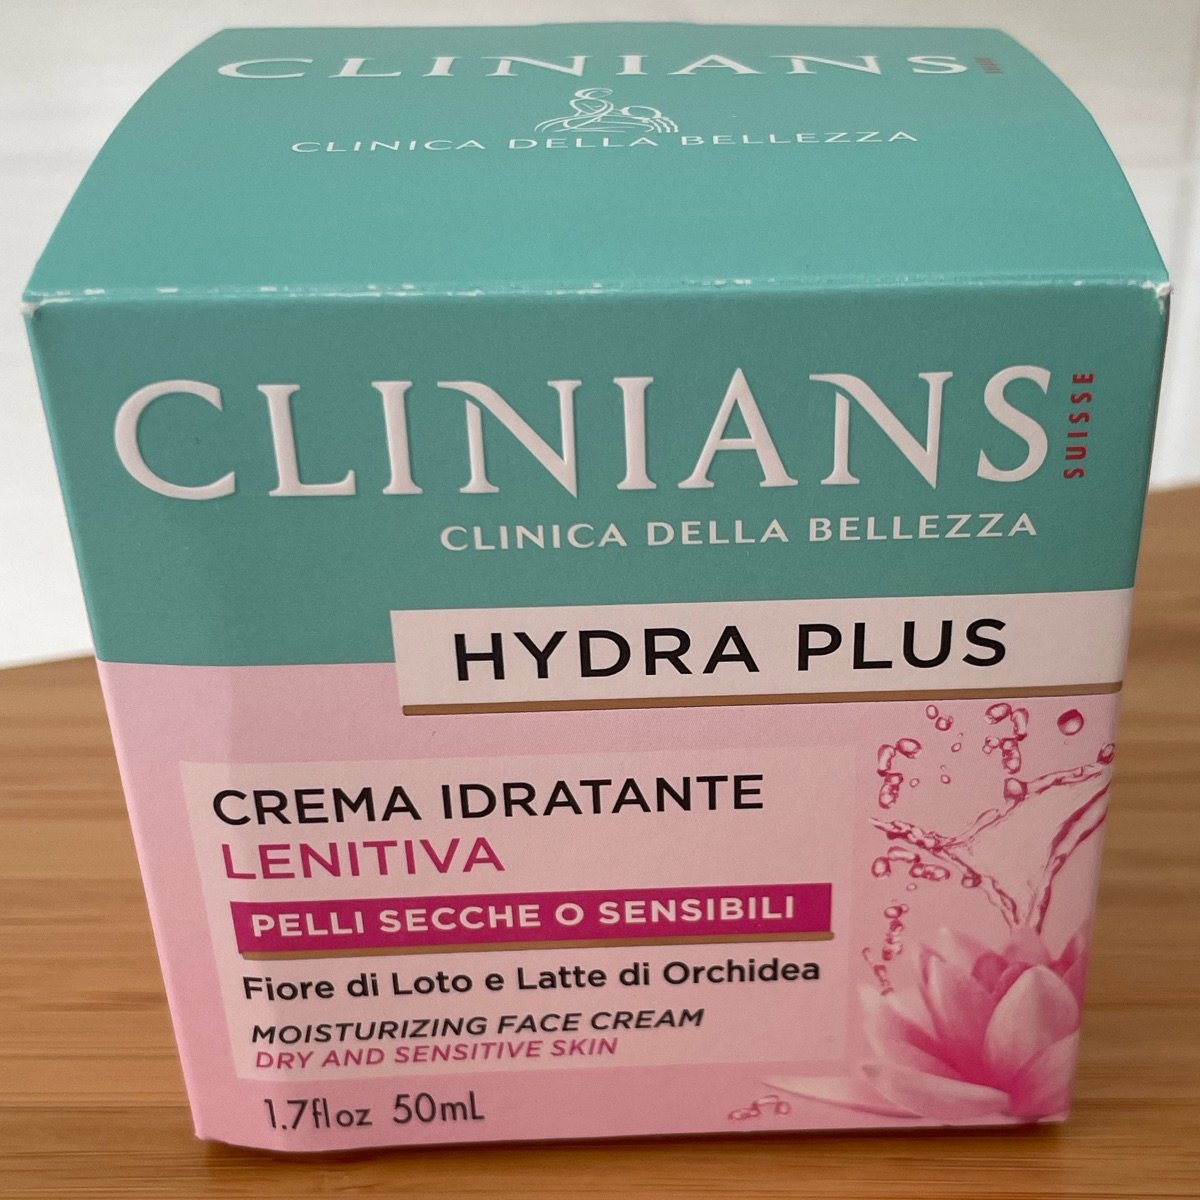 Clinians Hydra Plus Crema Idratante Lenitiva Reviews | abillion